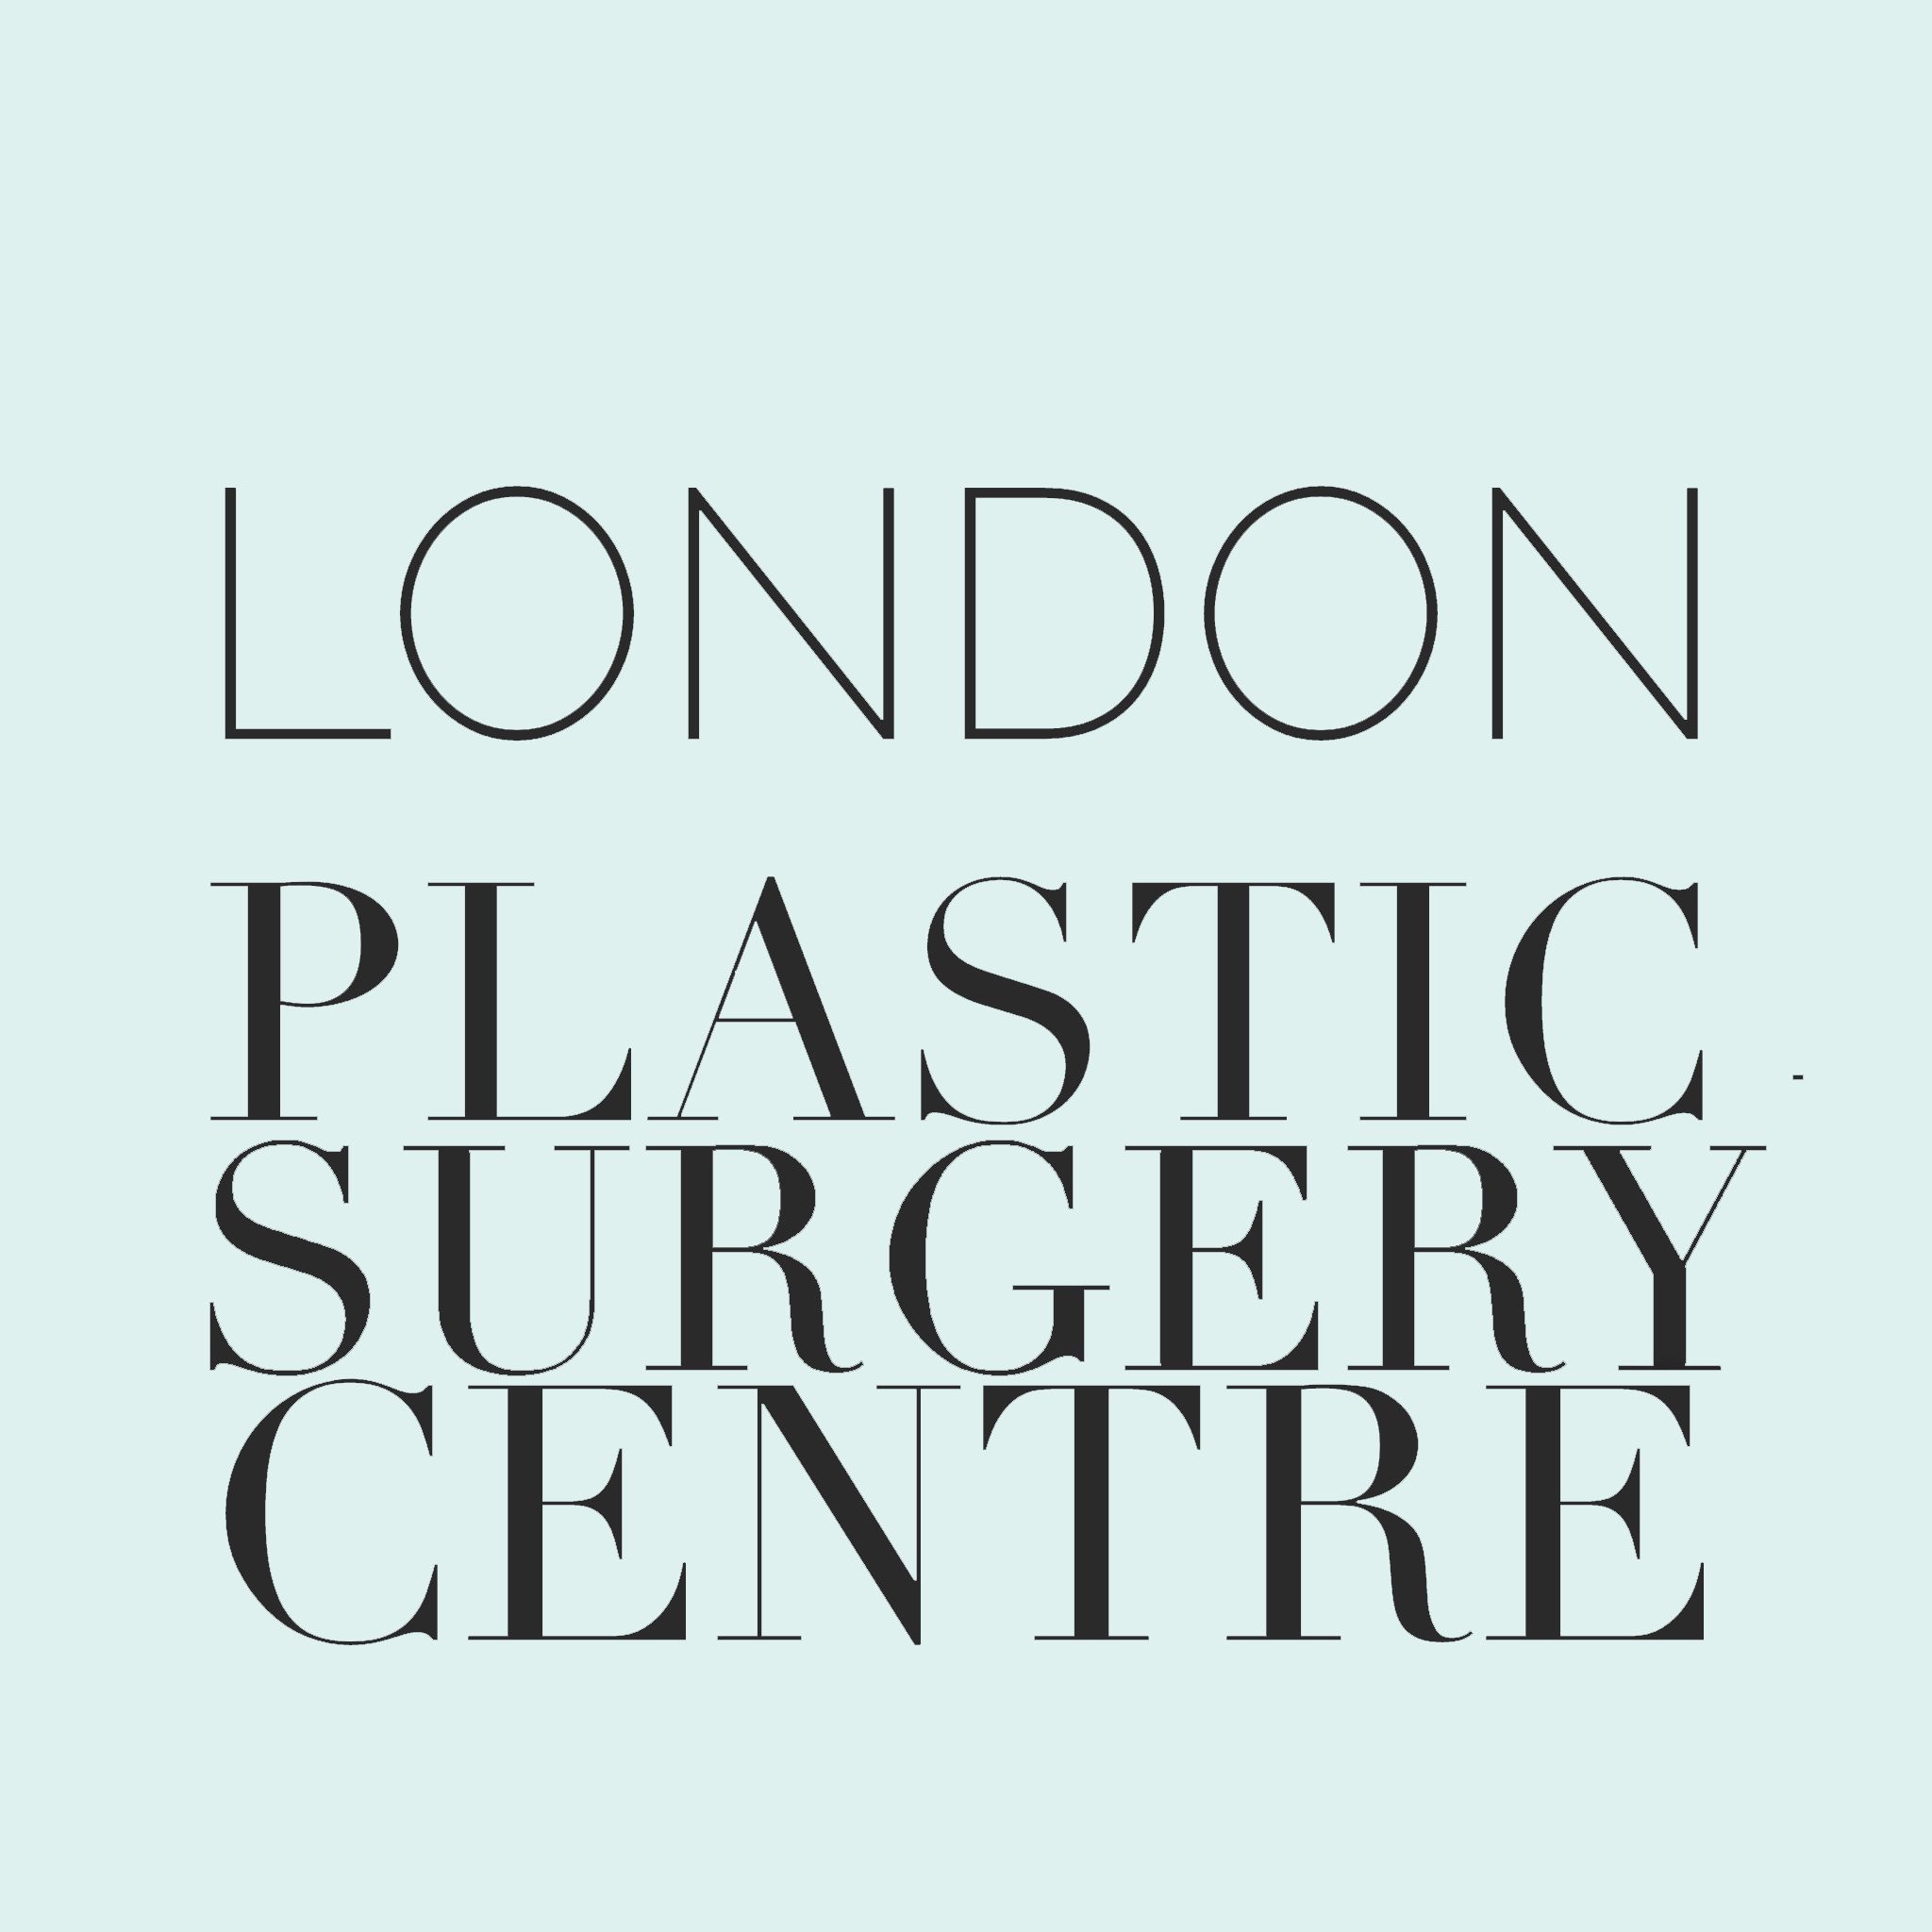 London plastic surgery clinic